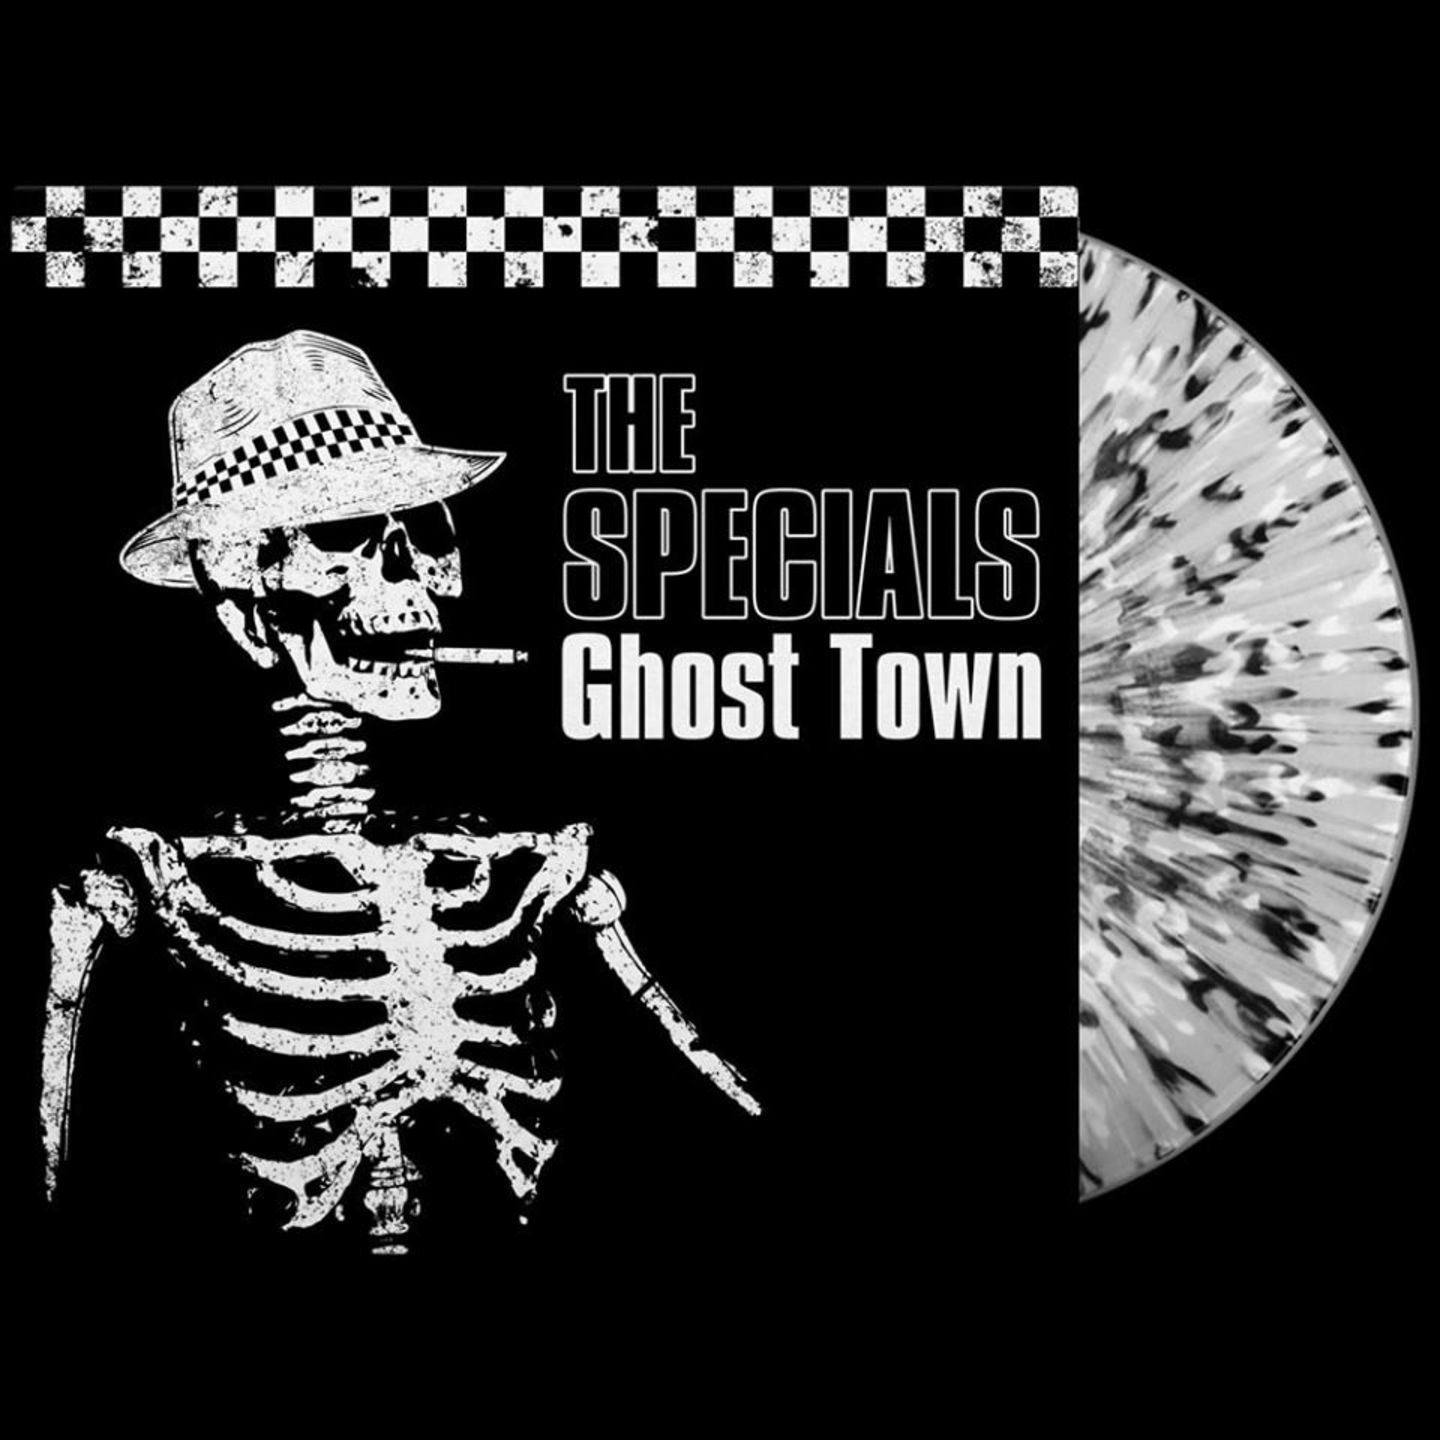 THE SPECIALS - Ghost Town LP Splatter vinyl